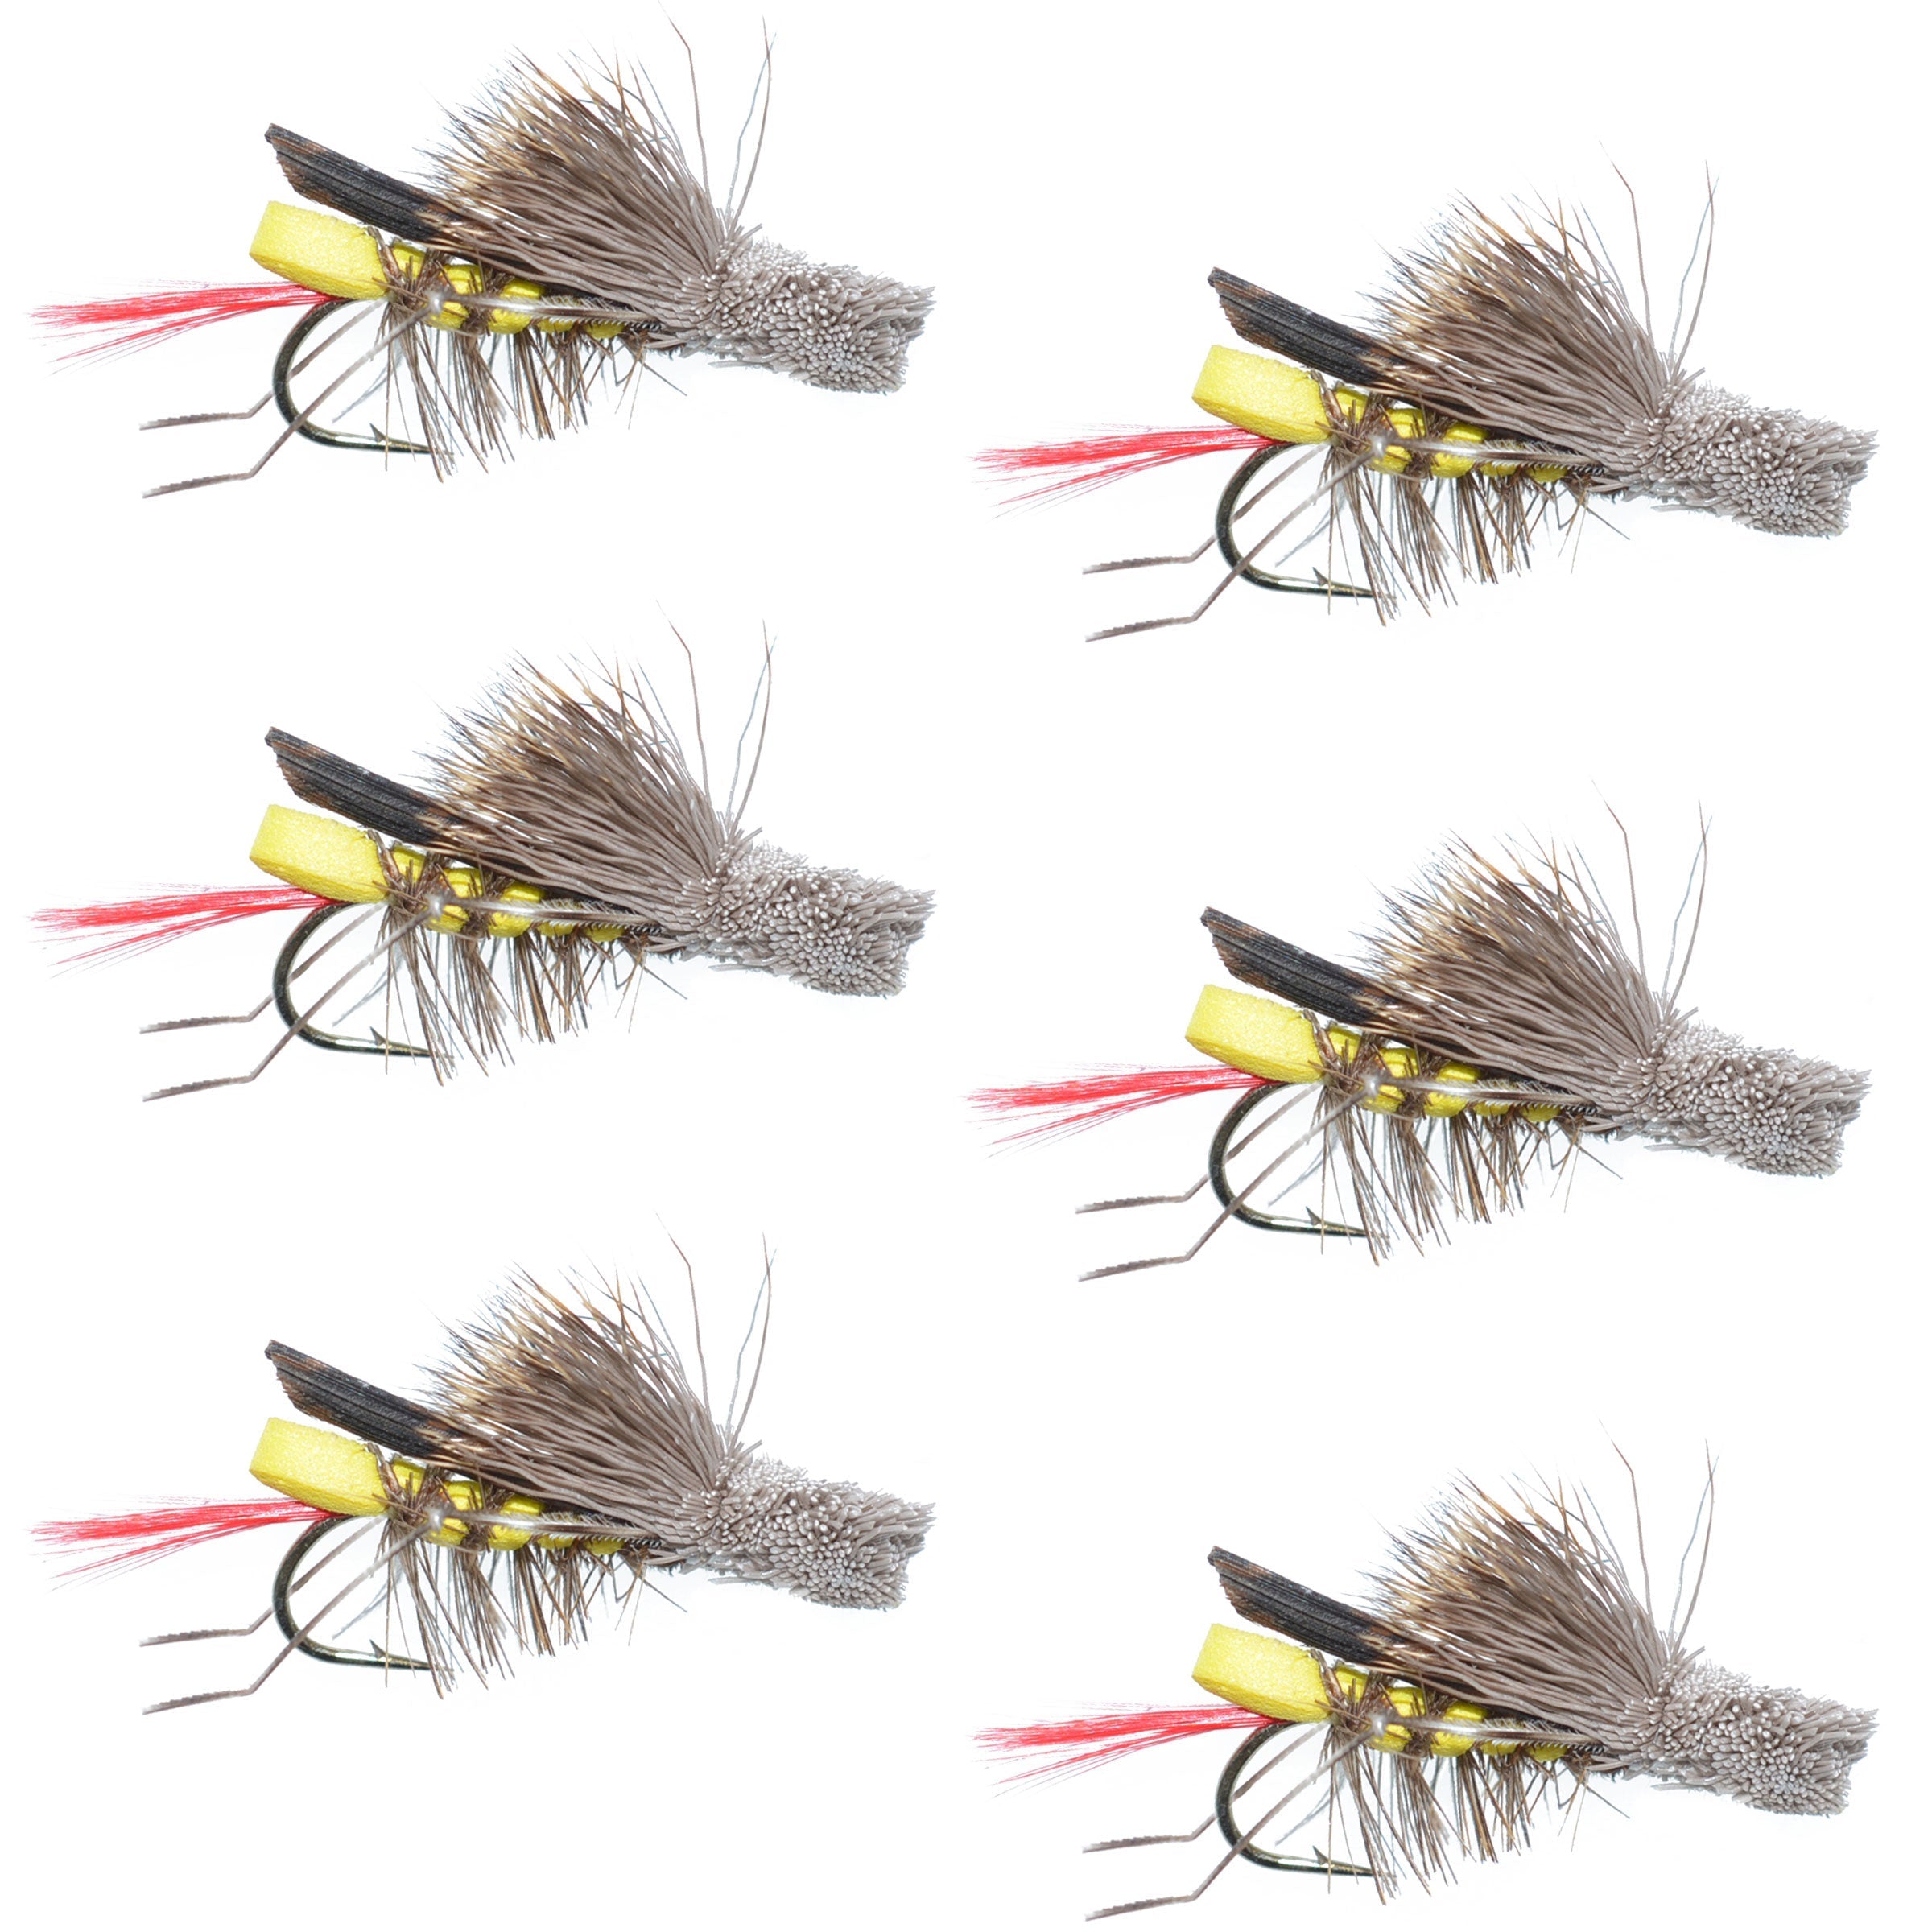 Dave's Hopper Yellow Foam Body Grasshopper Fly - 6 Flies Hook Size 8